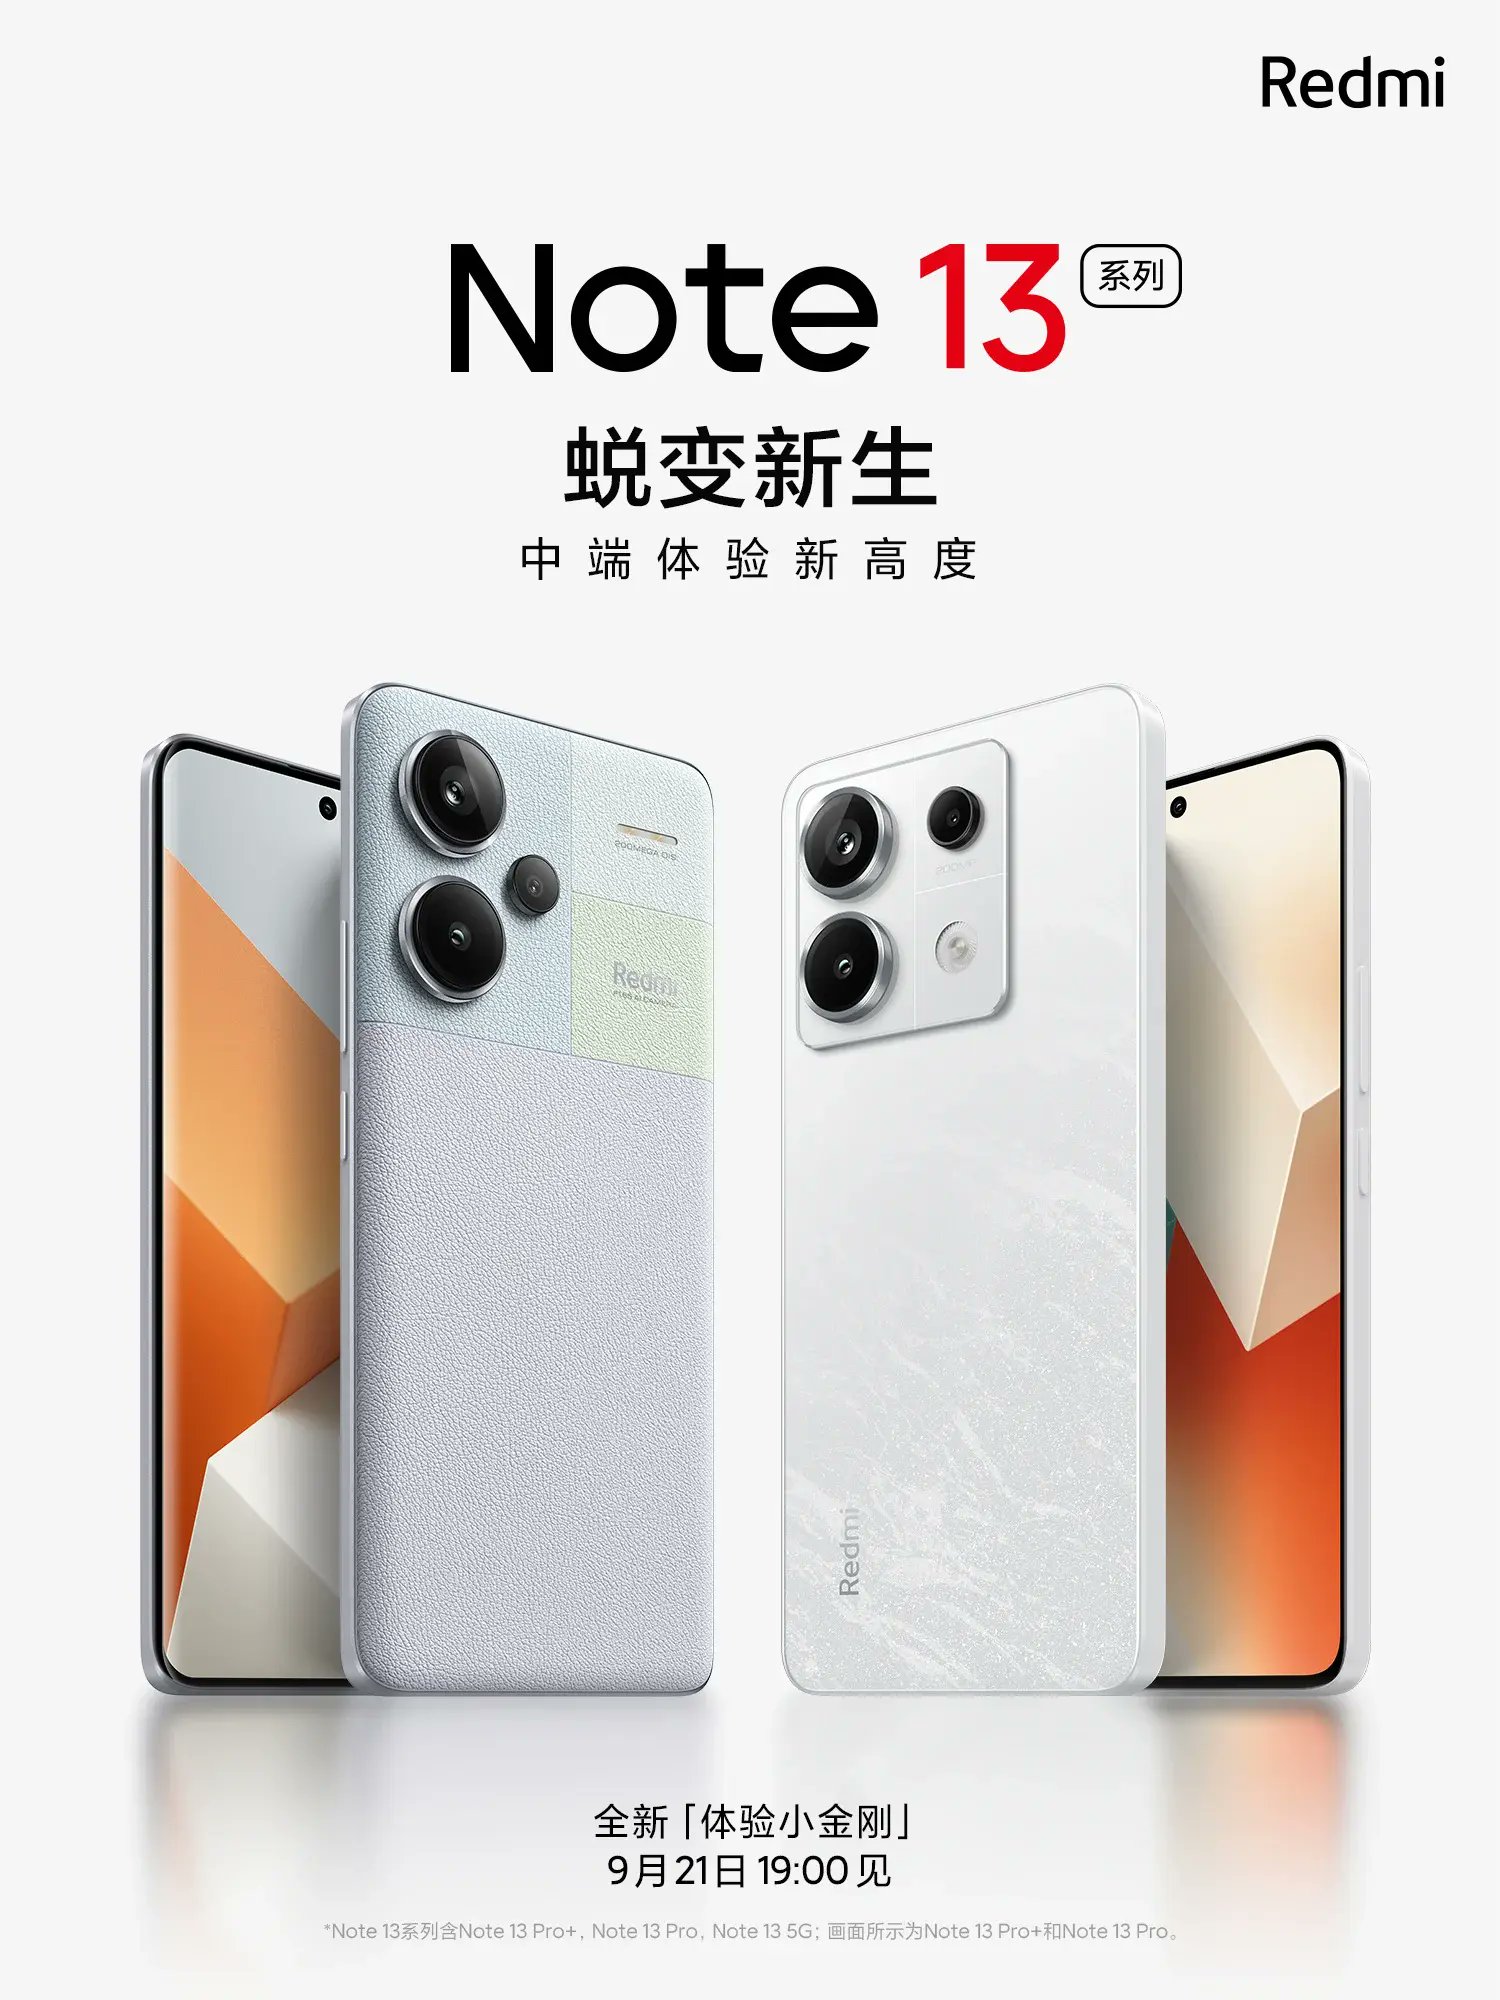 Jose Morales Ros on X: ⏱️TIC TAC 3⃣Redmi Note 13 Series se presentarán el  próximo 21 de septiembre en China. Serán 3 modelos. Redmi Note 13 5G Redmi  Note 13 Pro 5G